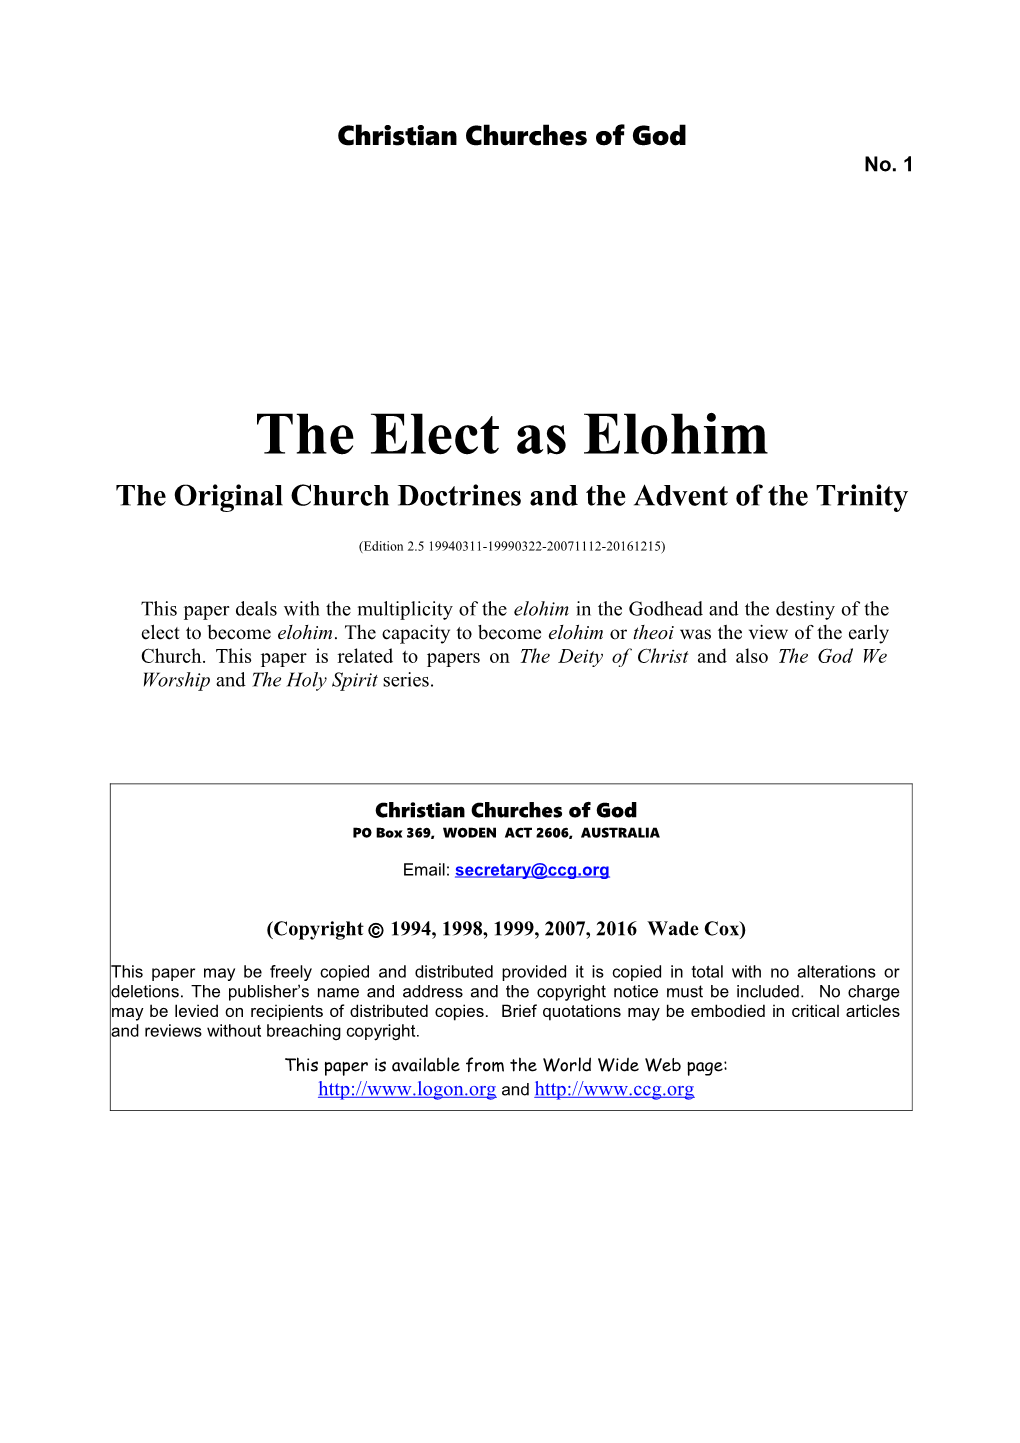 The Elect As Elohim (No. 1)